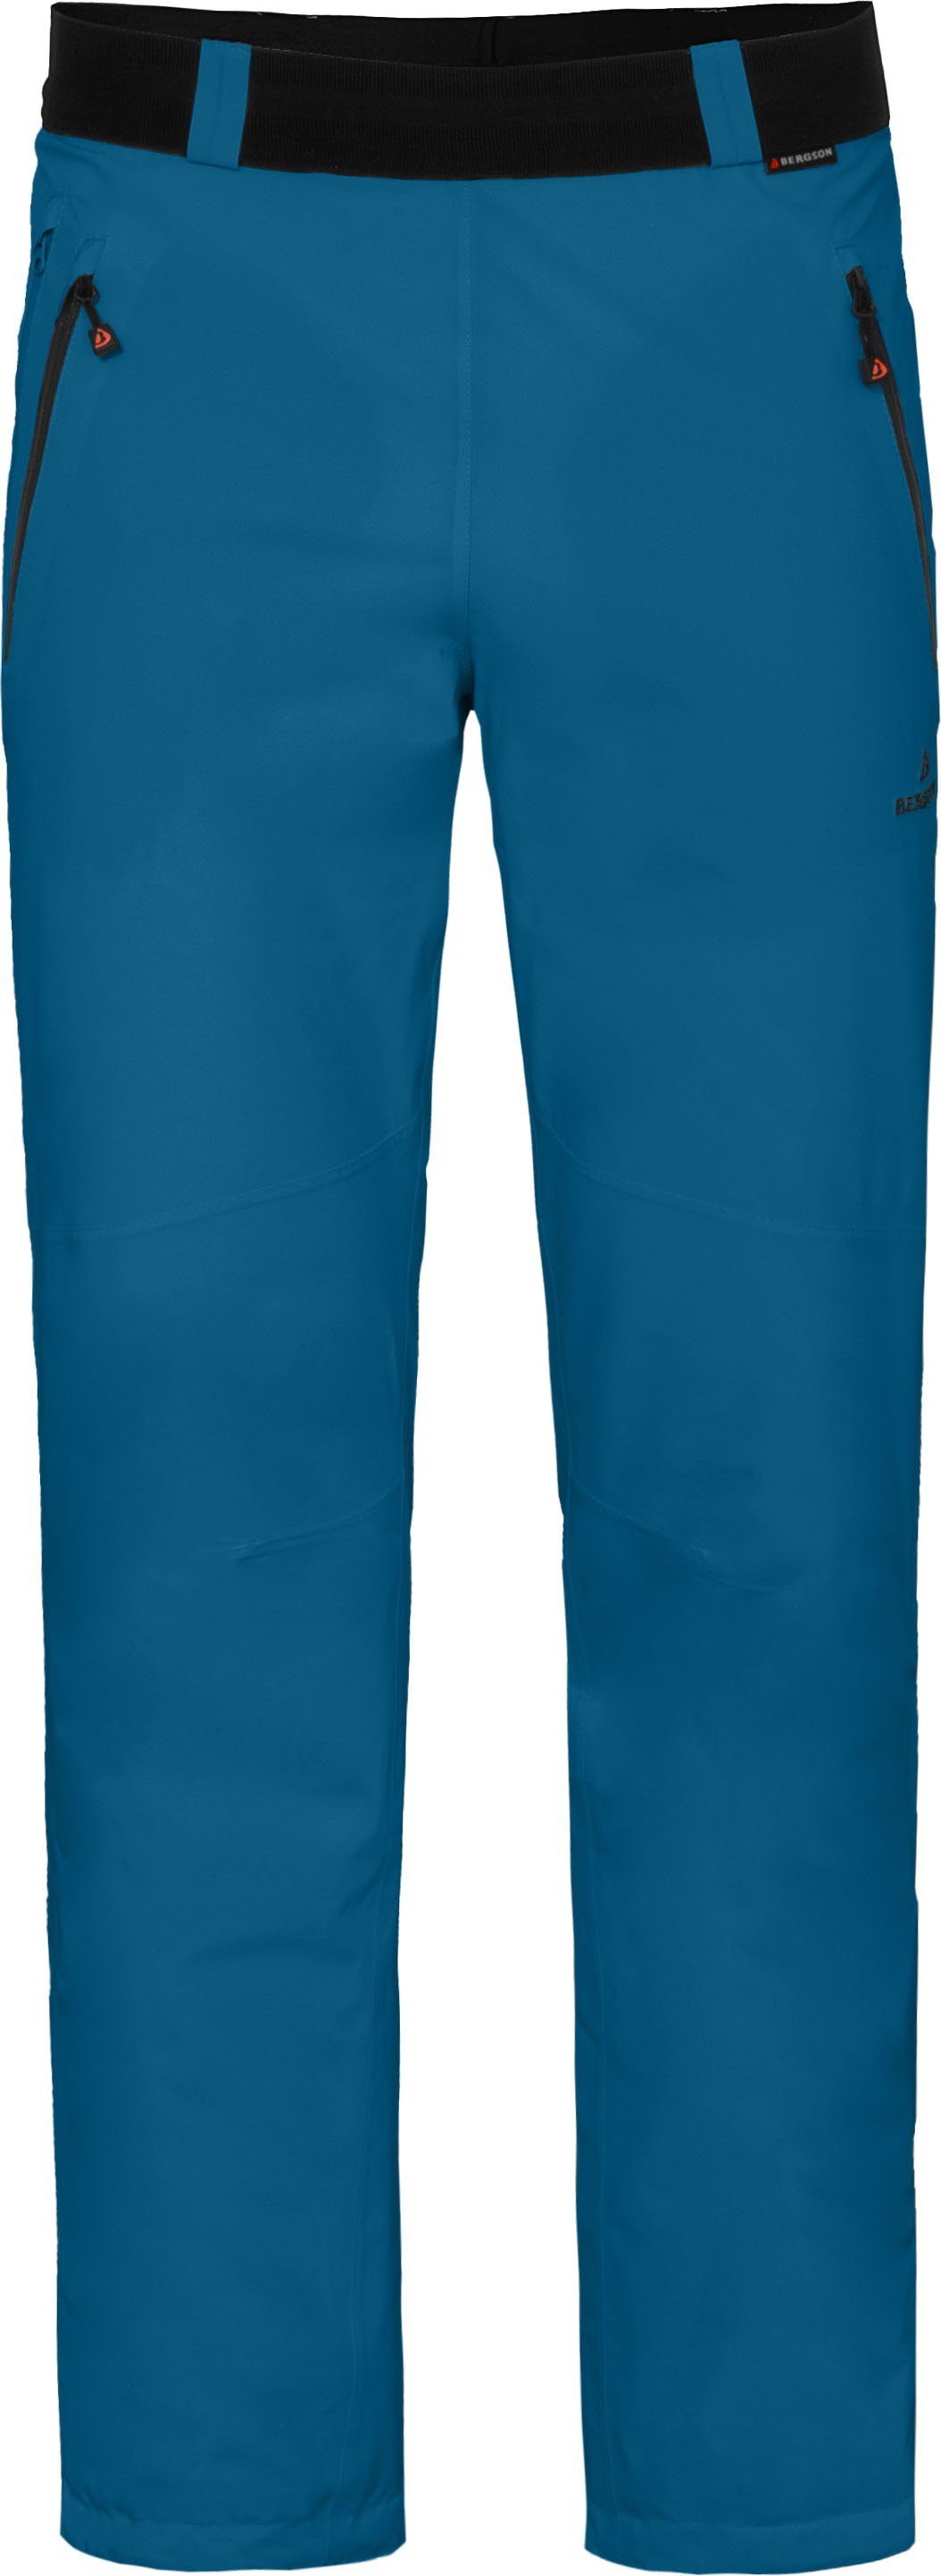 Bergson Regenhose FALUN THERMO Herren (Über) Regenhose, leicht wattiert, 20000 mm Wassersäule, Kurzgrößen, Saphir blau